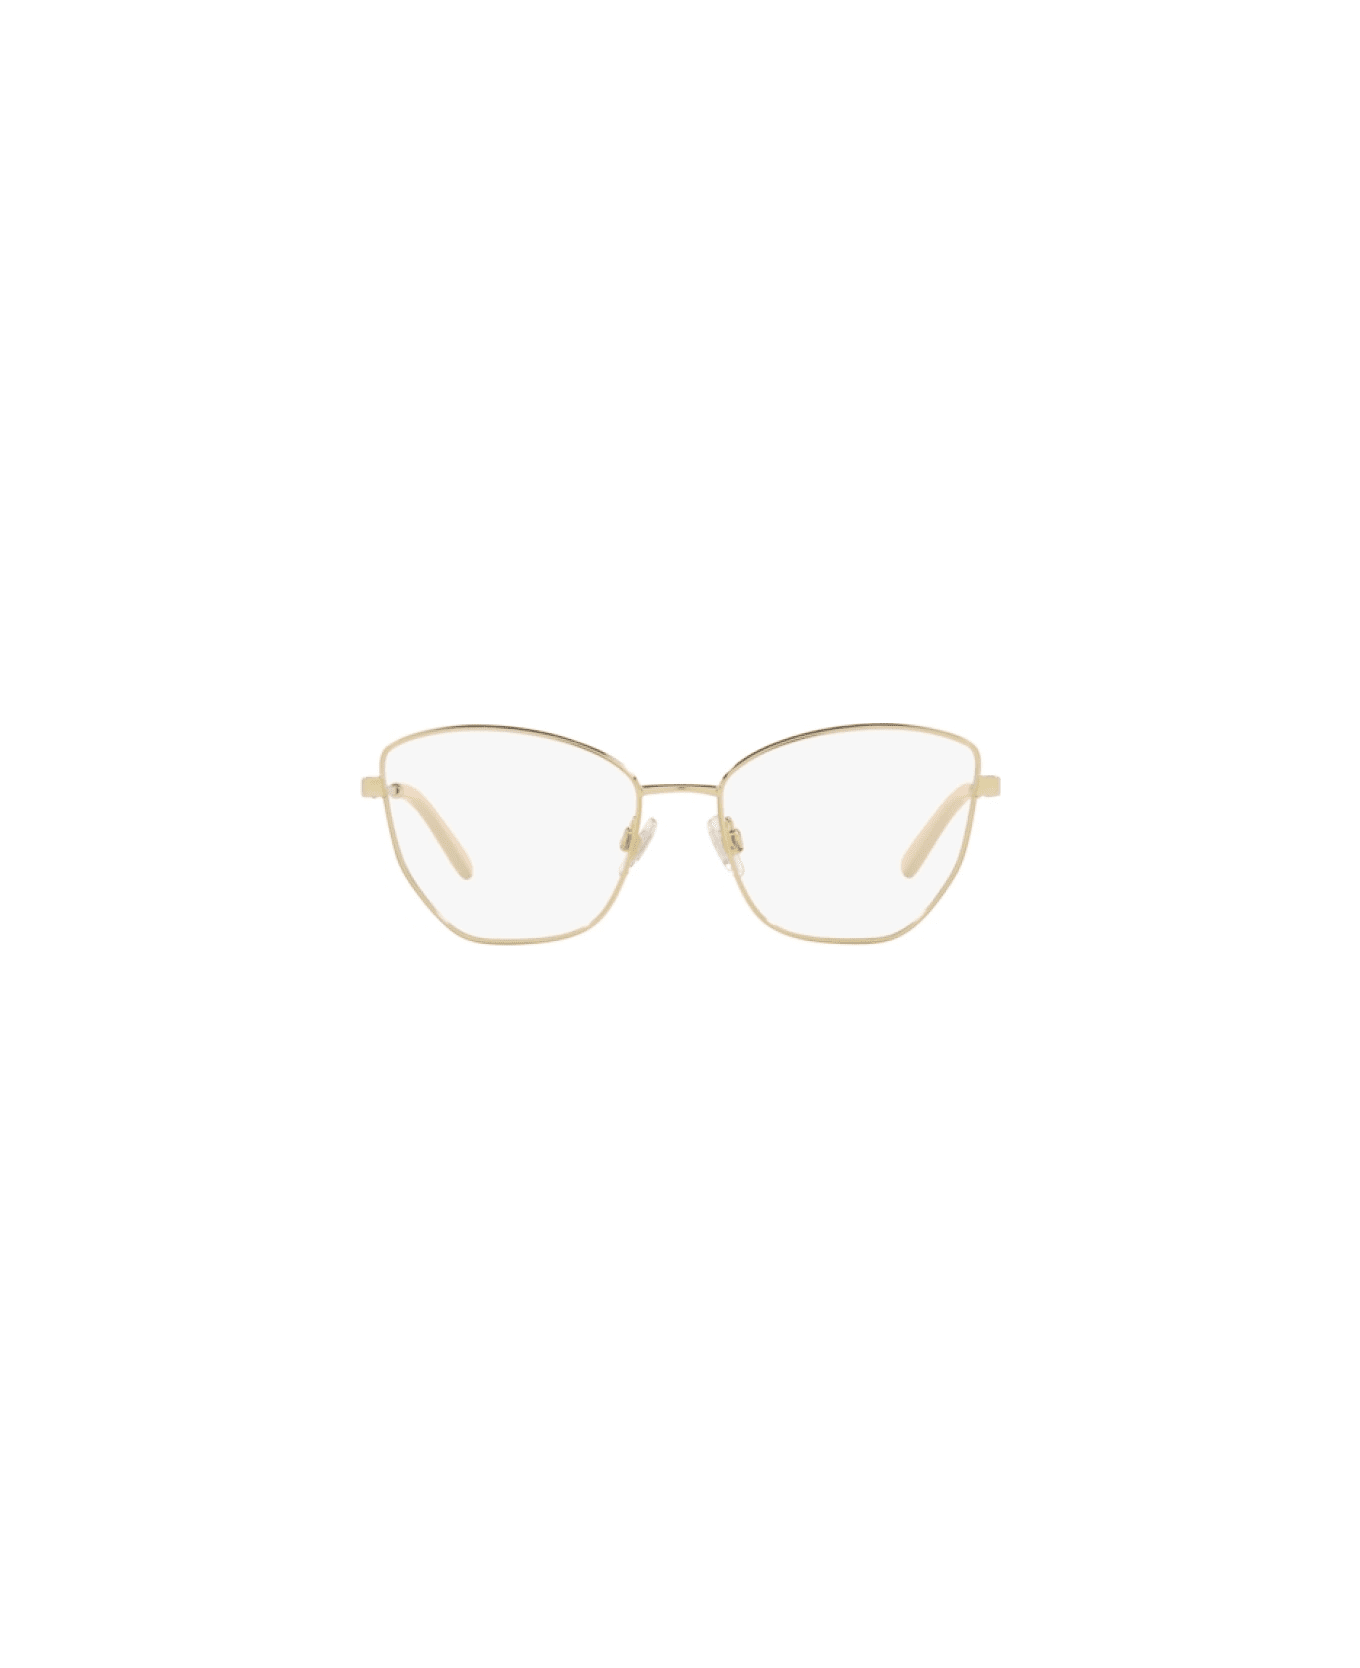 Dolce & Gabbana Eyewear DG1340 02 Glasses